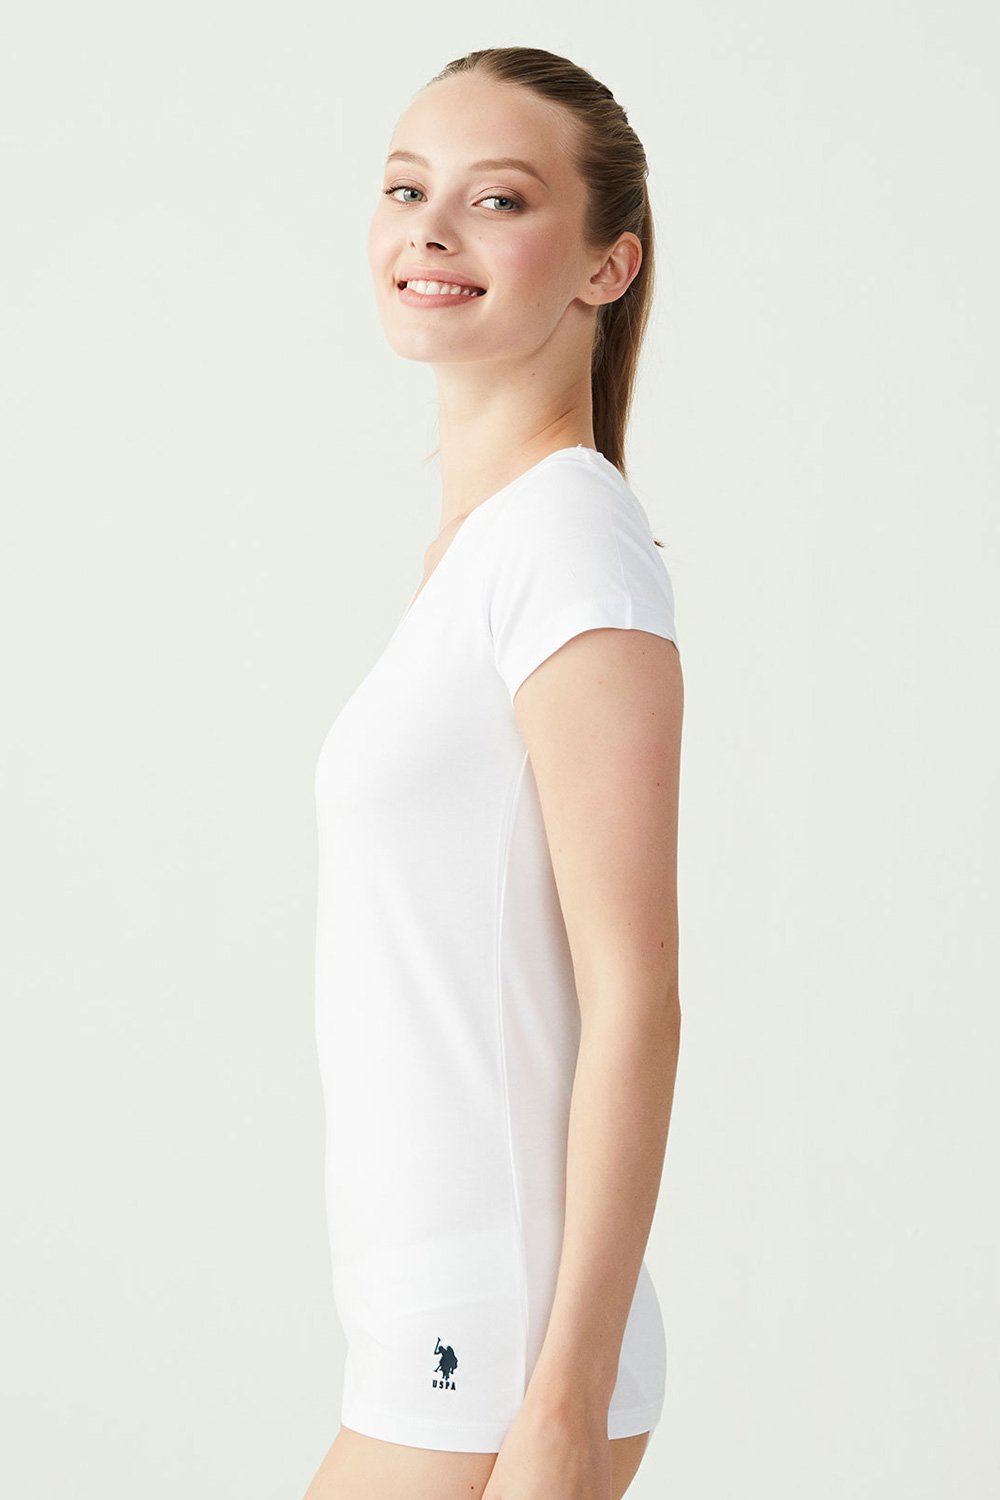 U.S. Polo Assn. Kadın Beyaz Kısa Kollu V Yaka T-Shirt | Modcollection.com.tr